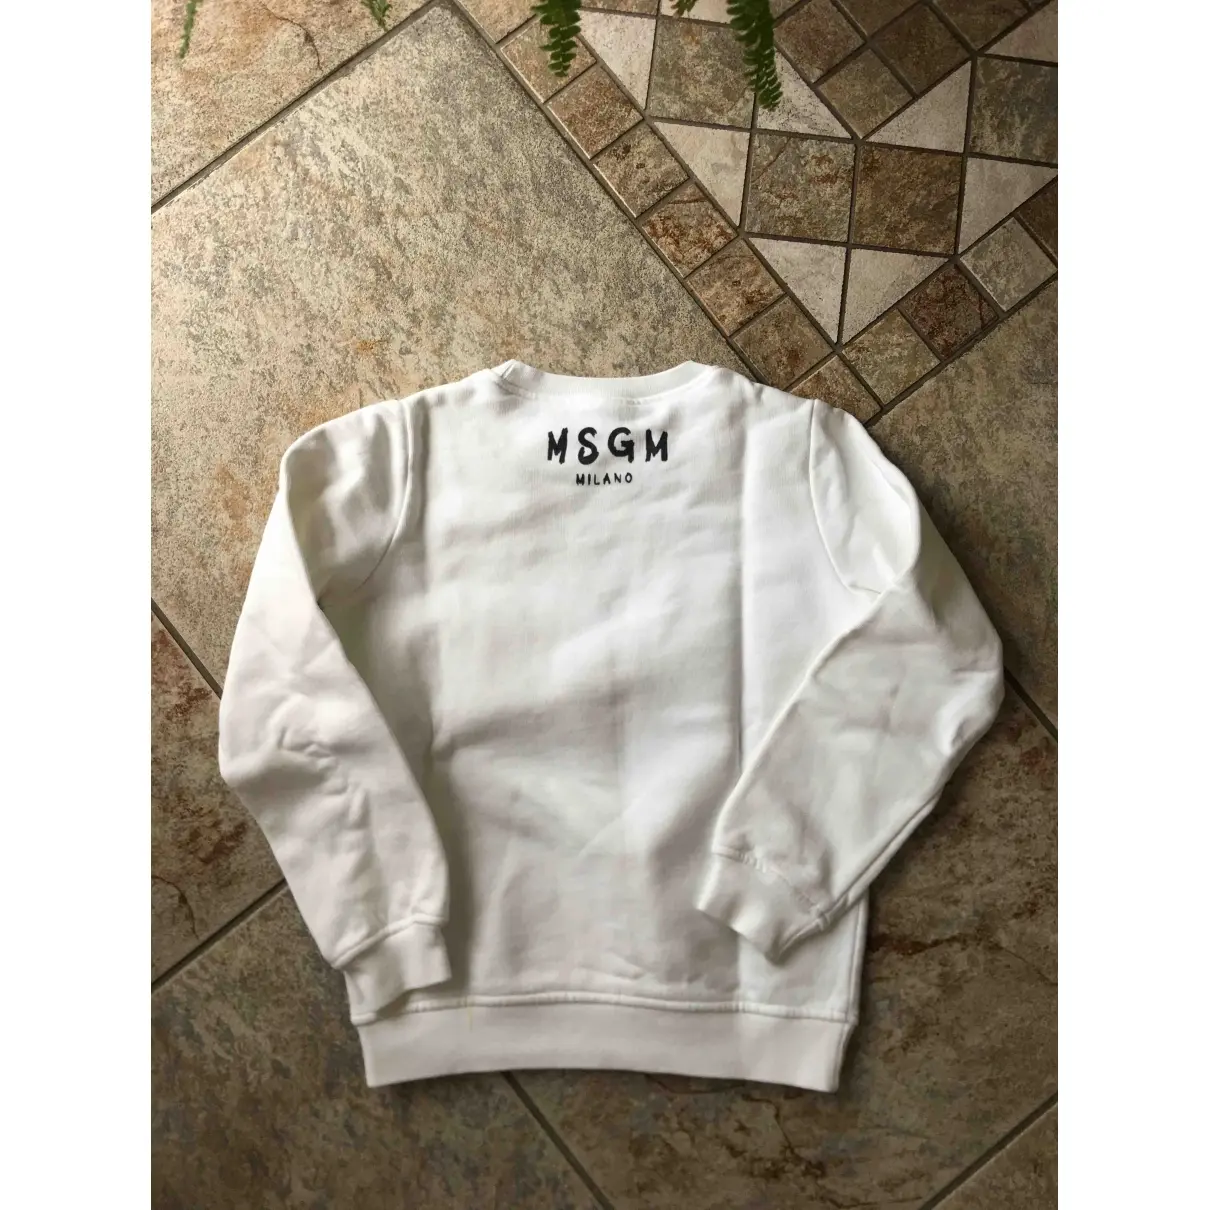 MSGM Sweatshirt for sale